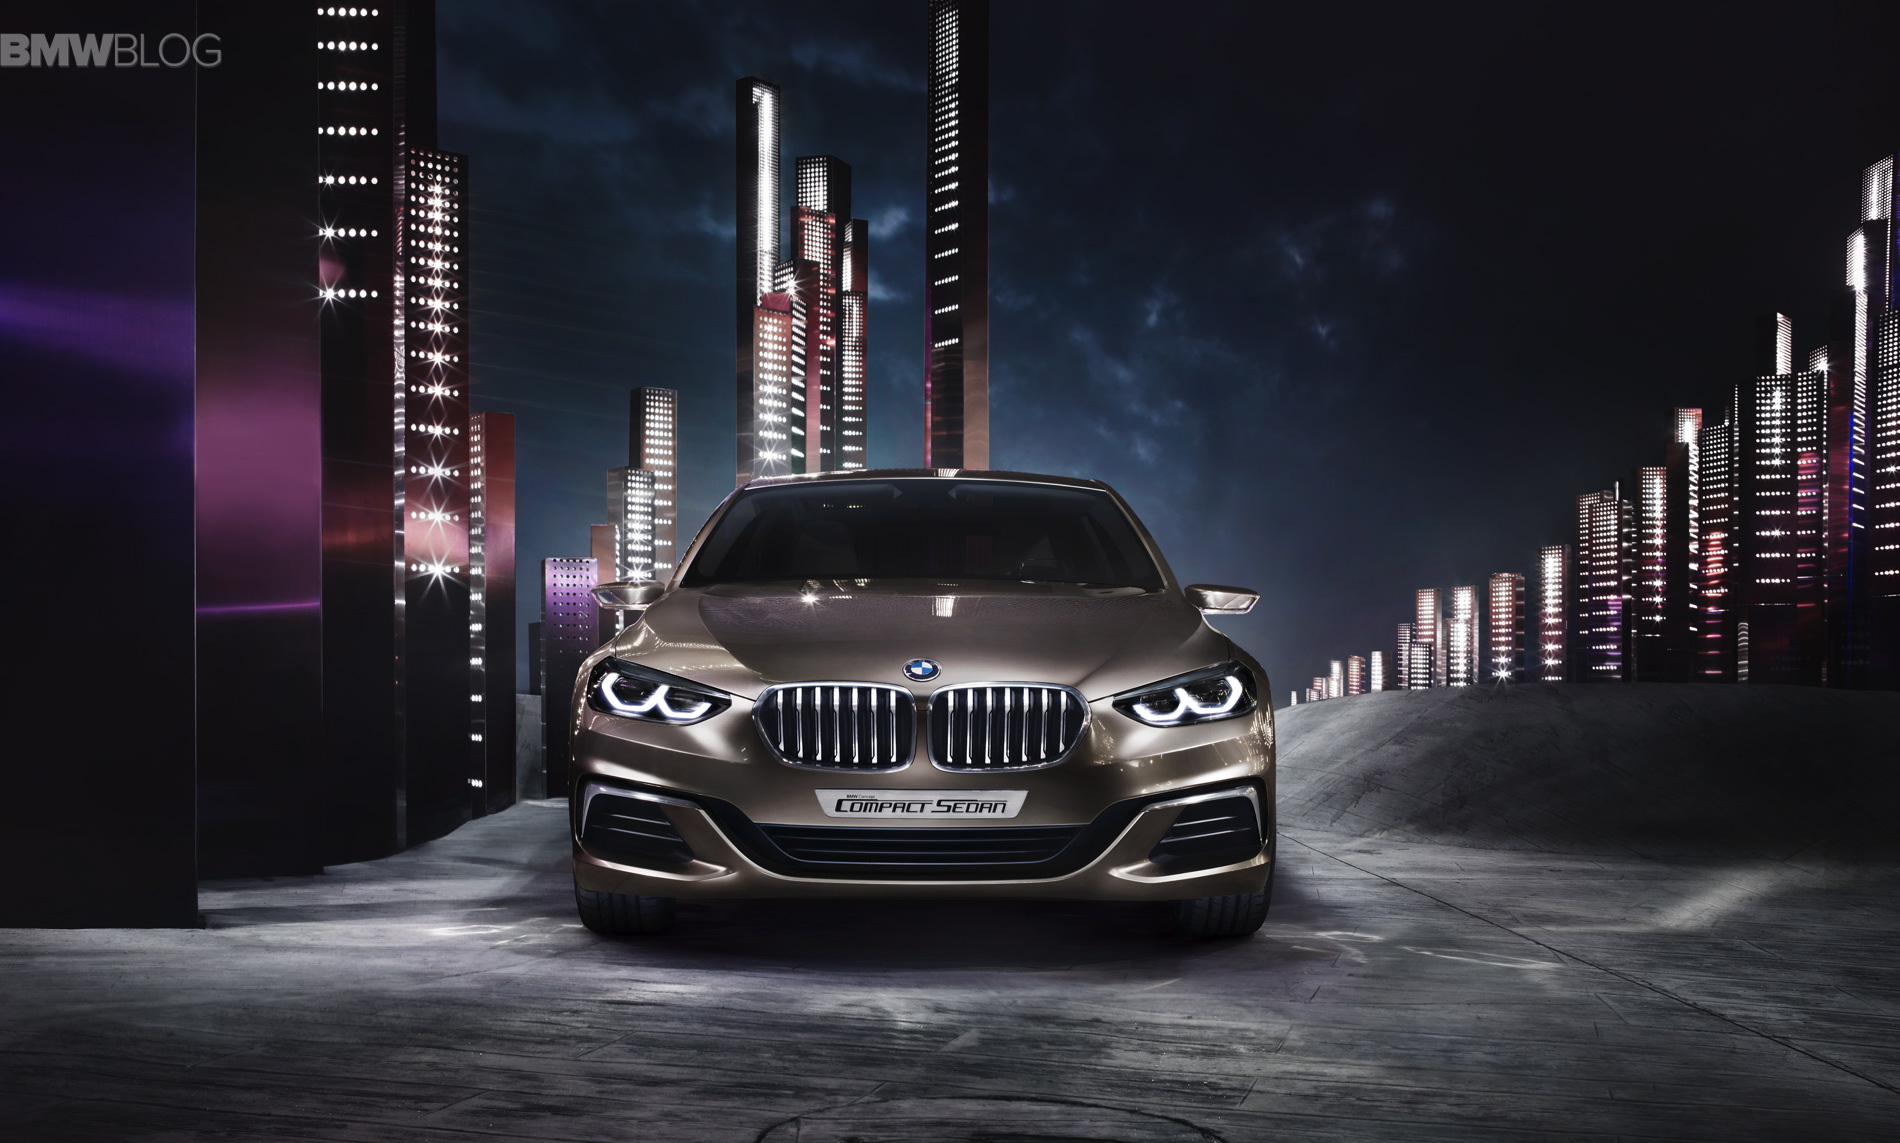 BMW Concept Compact Sedan images 10